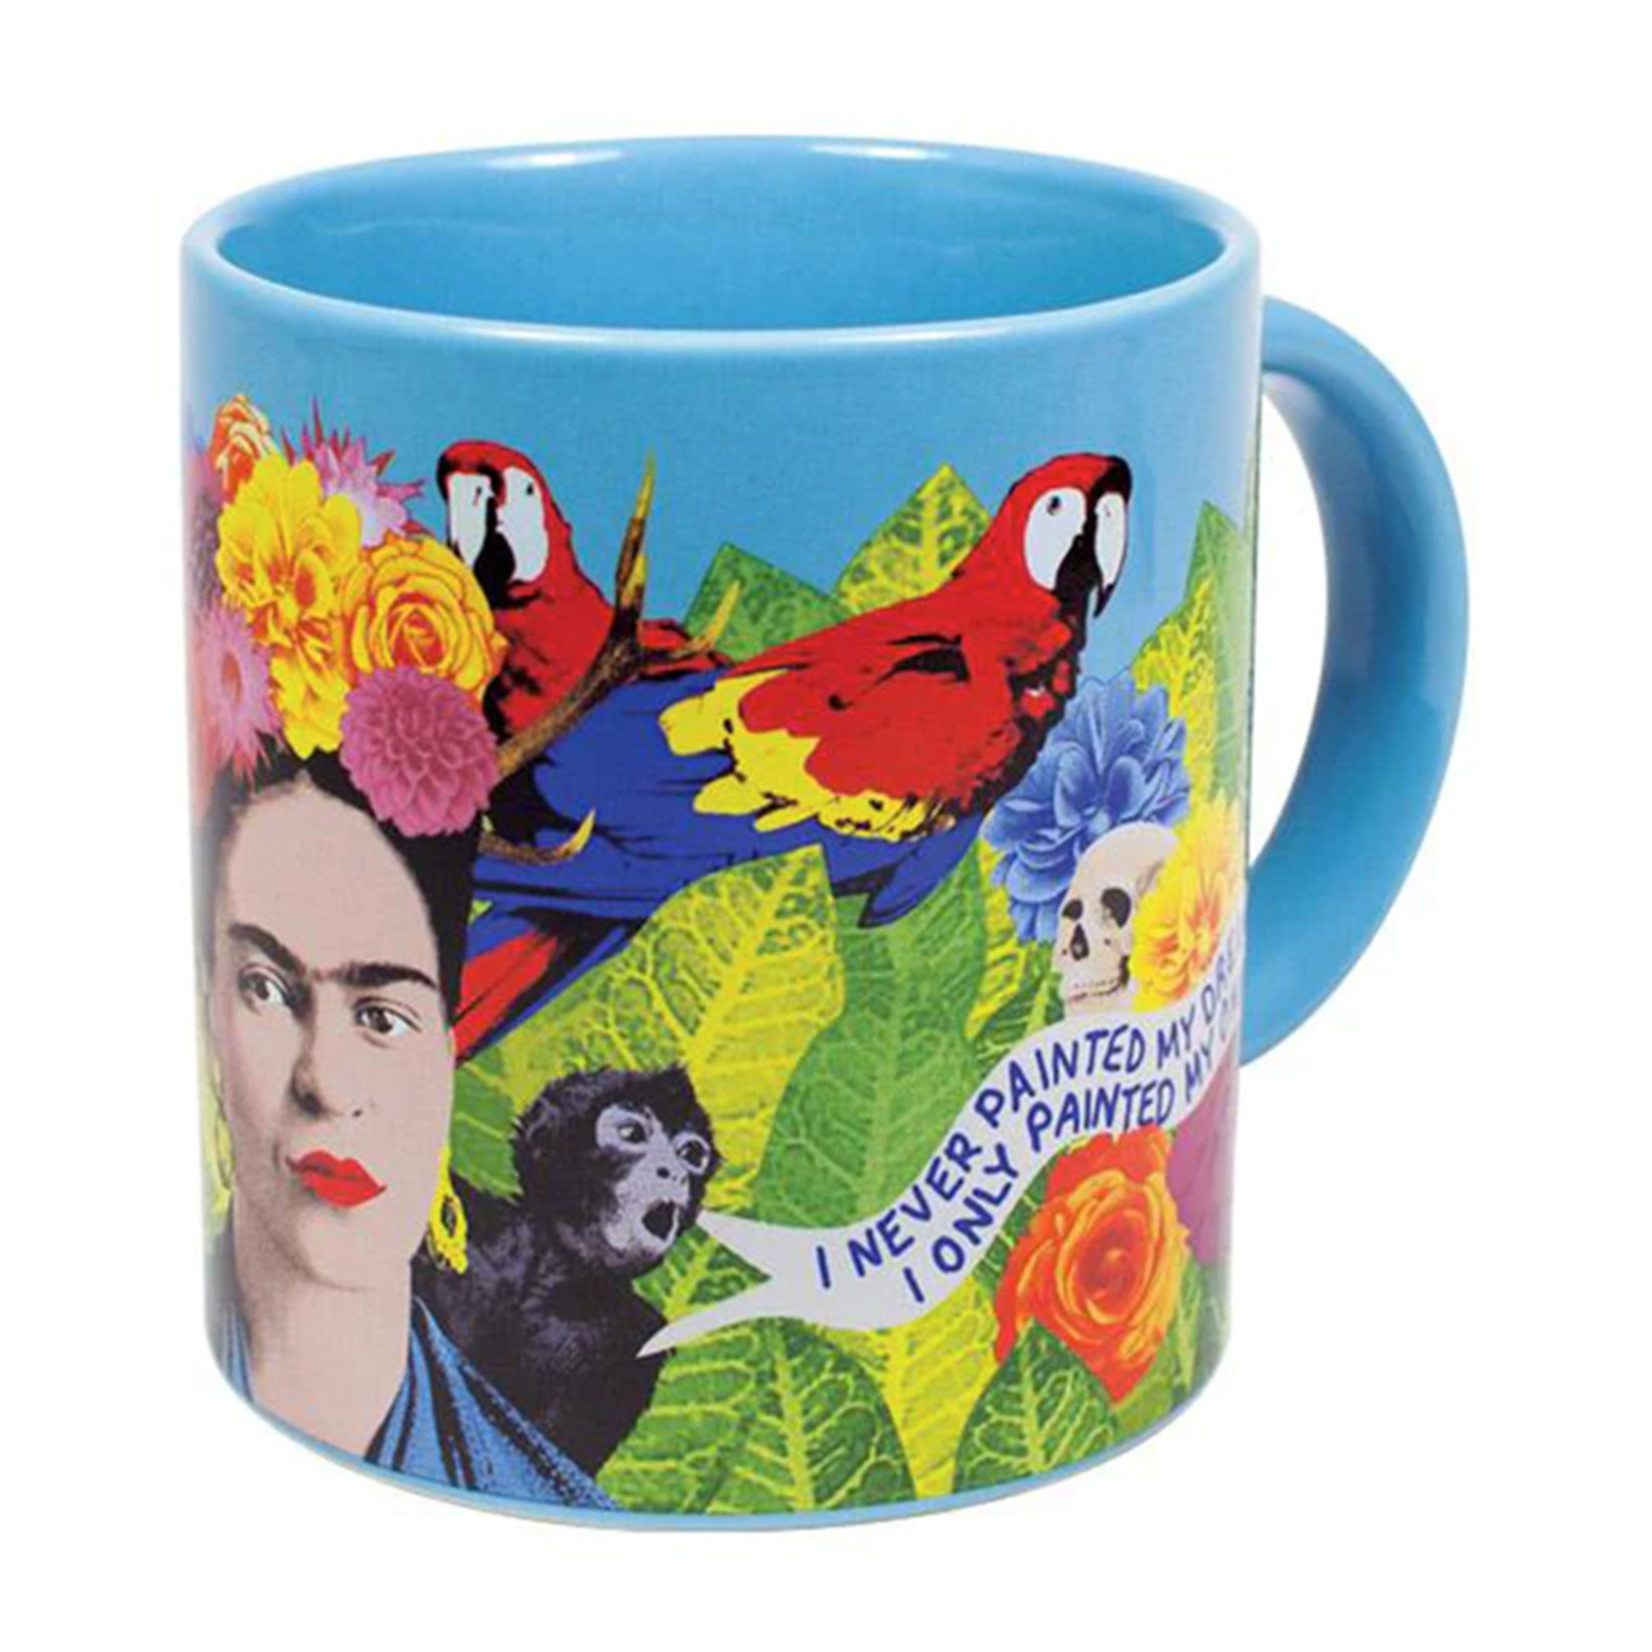 Mug Frida Kahlo